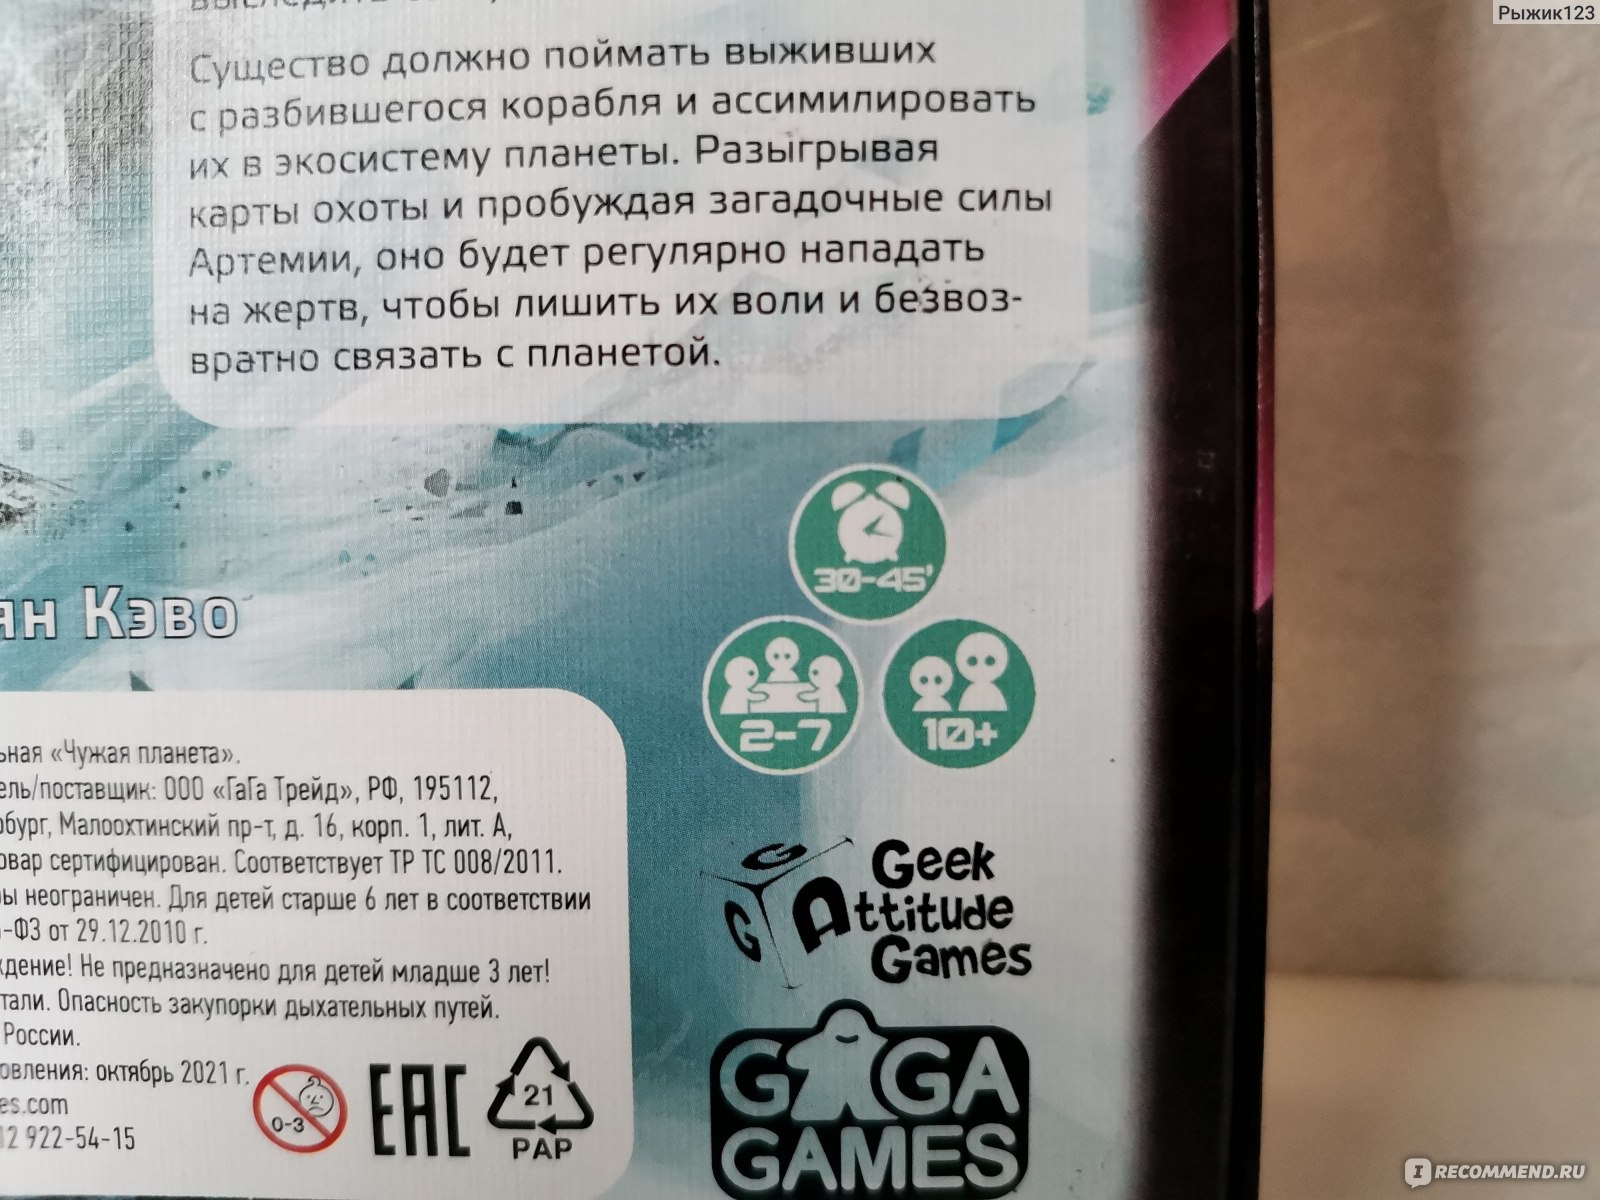 Настольная игра GaGa Games Чужая планета